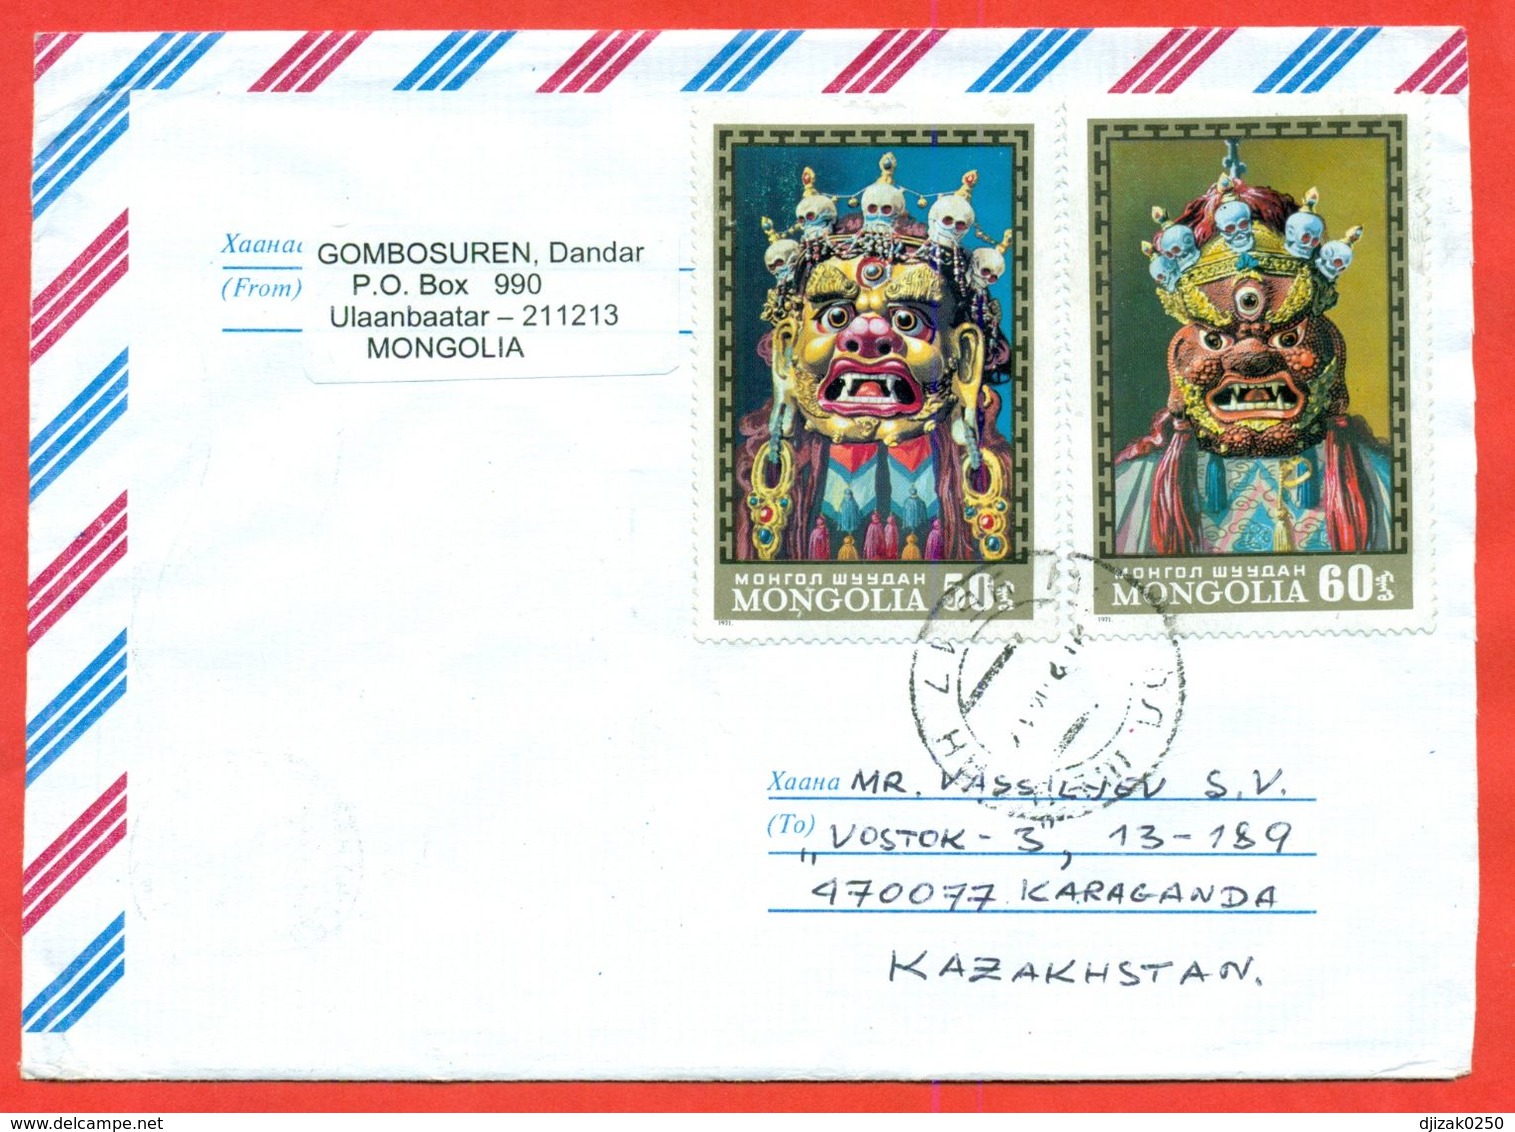 Mongolia 1971.Envelope Passed The Mail. Dance Masks. - Mongolia